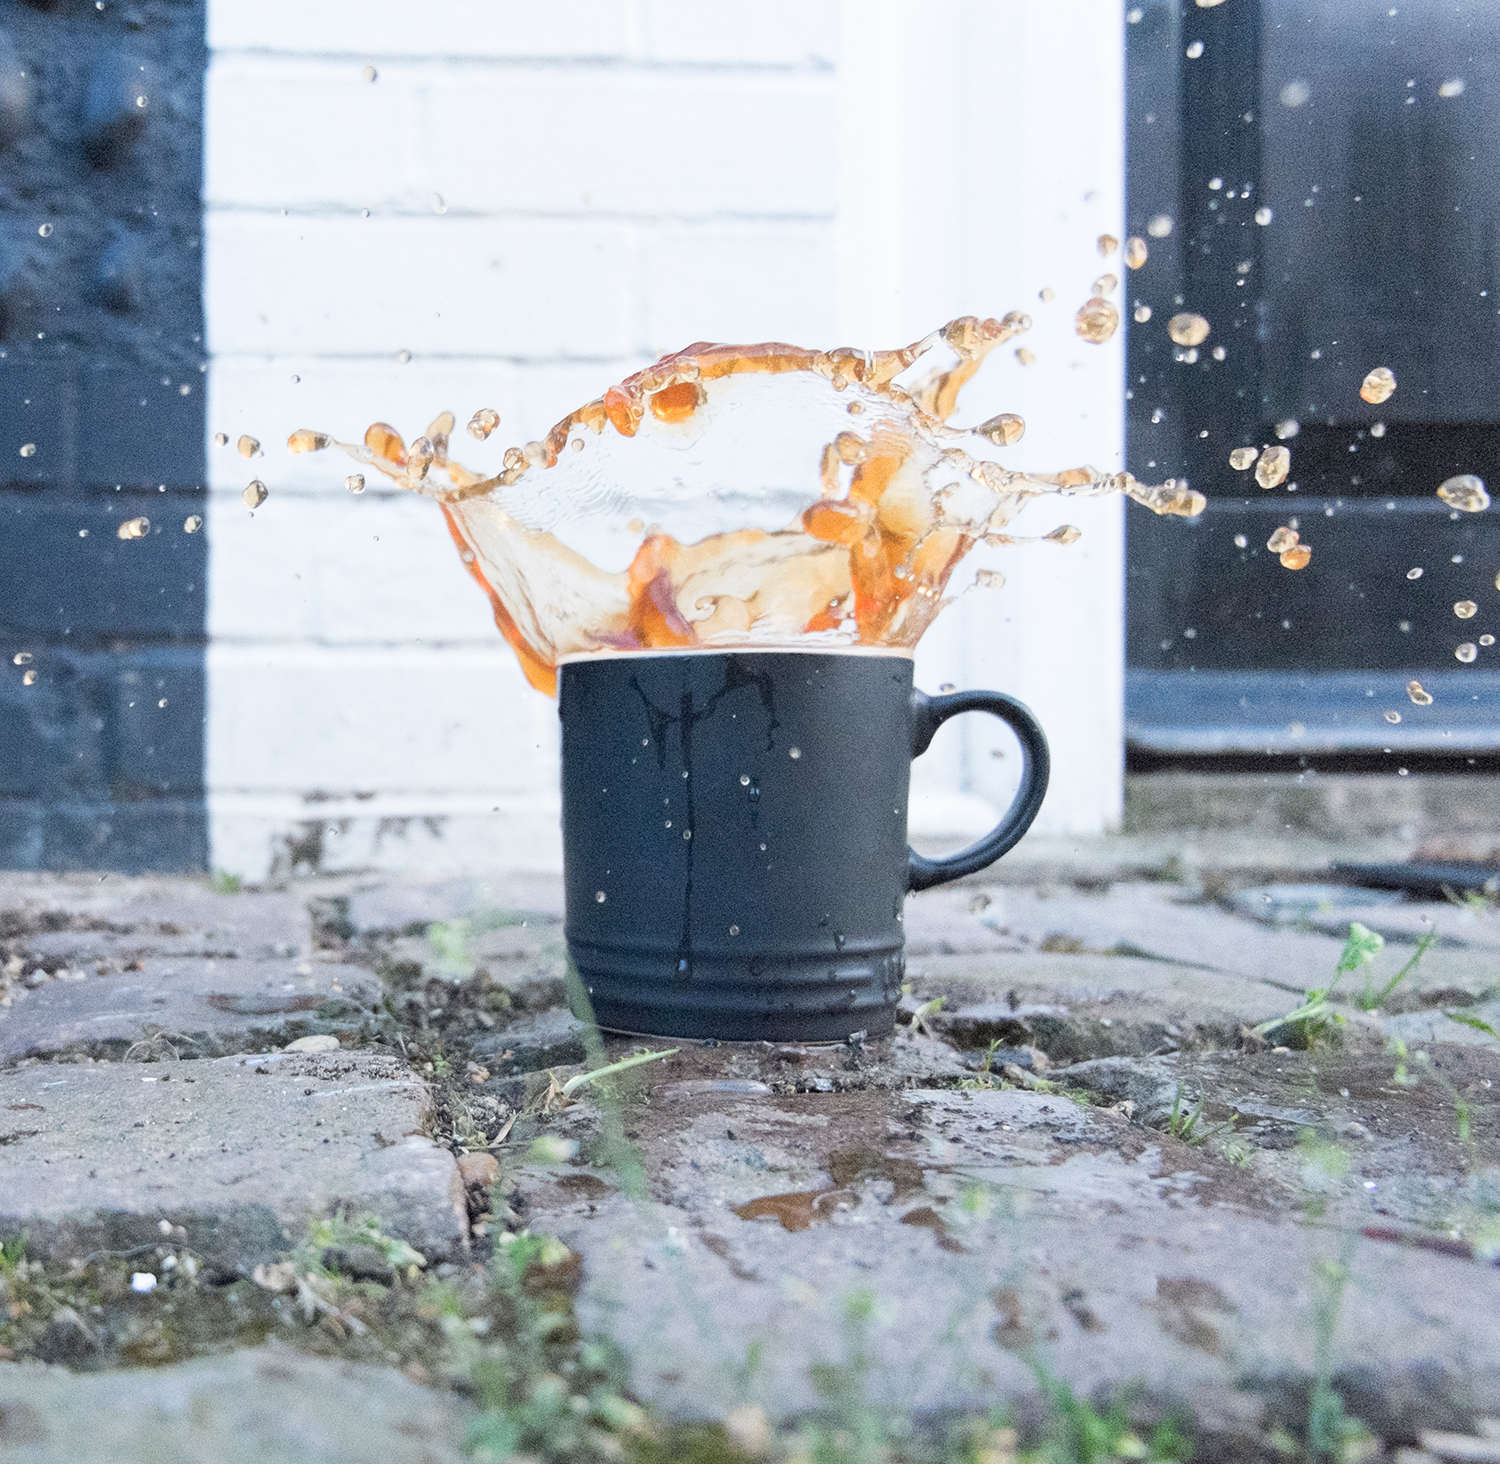 Tea splashing out of a mug, outdoors on a patio. Square crop.